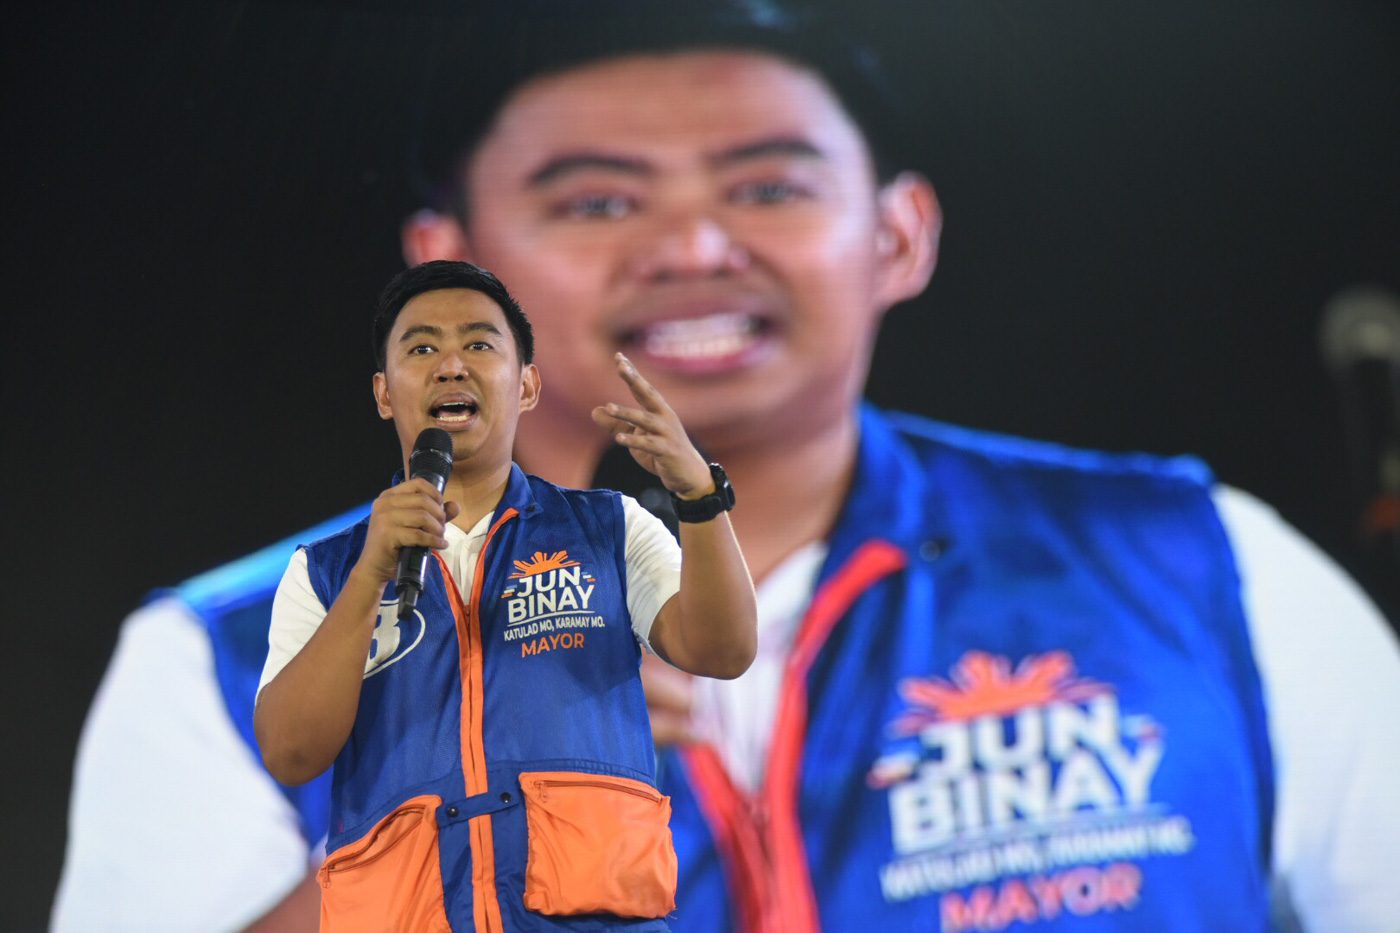 Junjun Binay to Makati: Accept bribe money, but vote for me